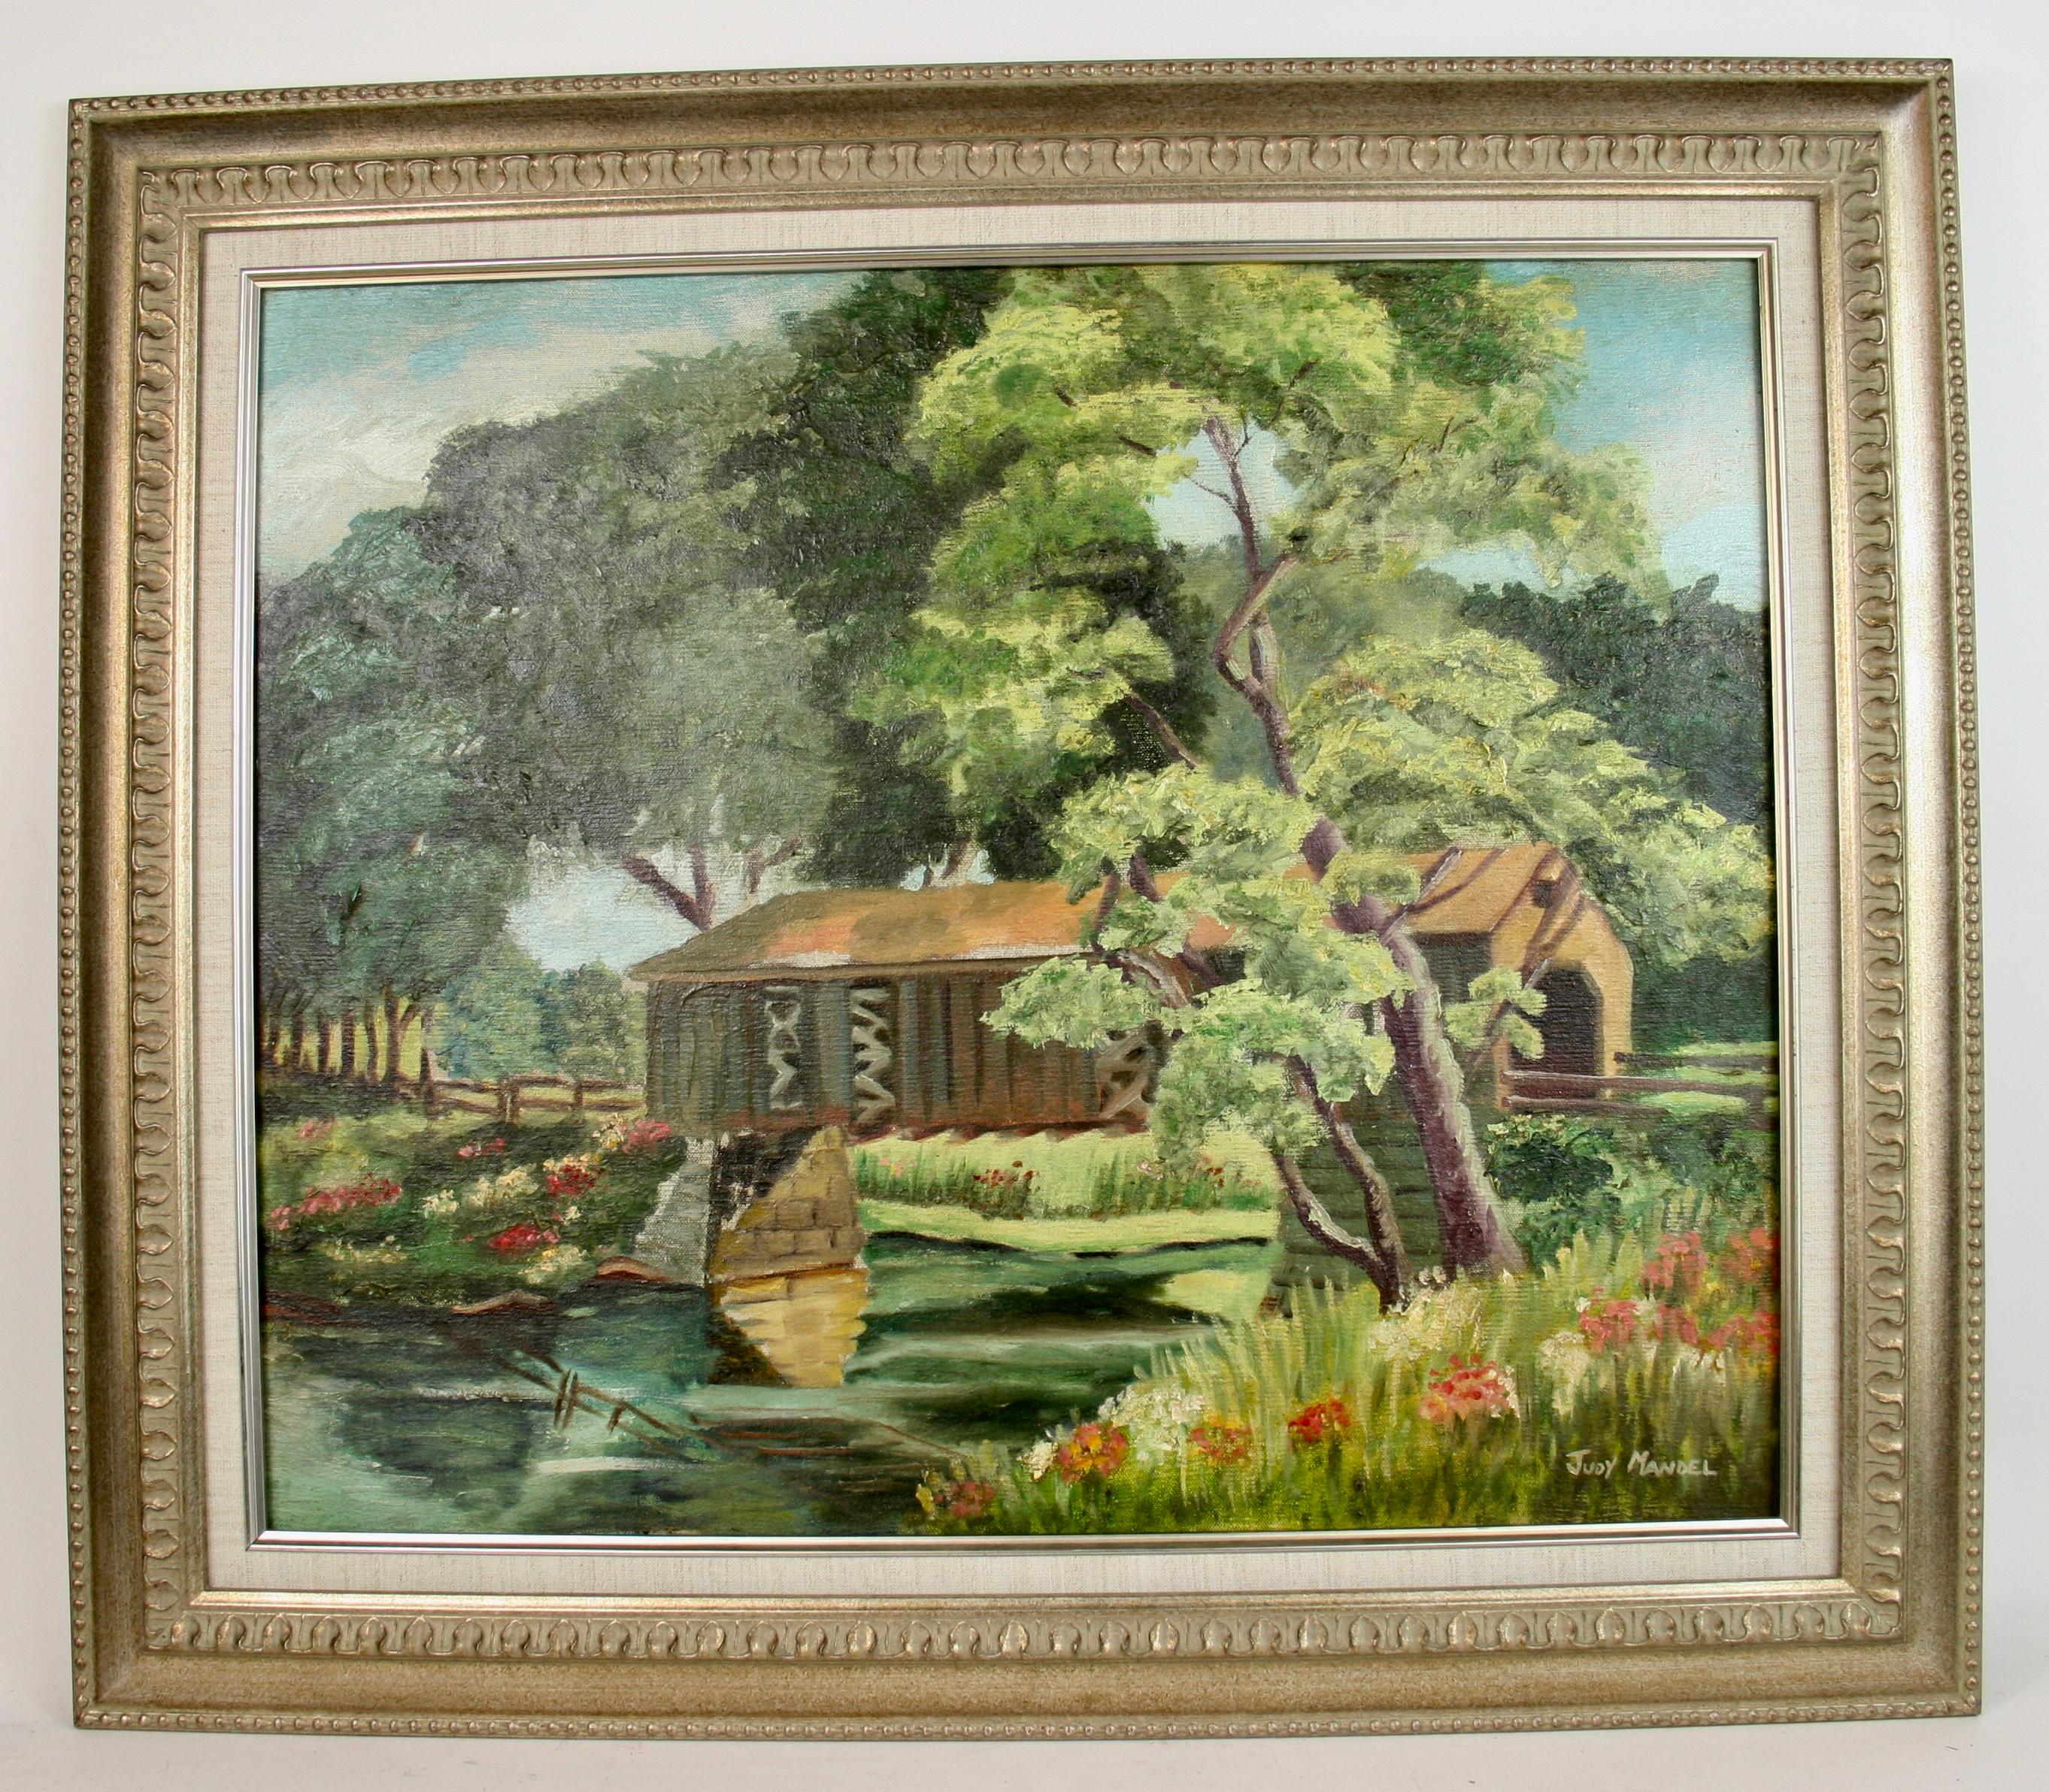 4095 Covered bridge landscape  oil on canvas set on board
Image size  20x24